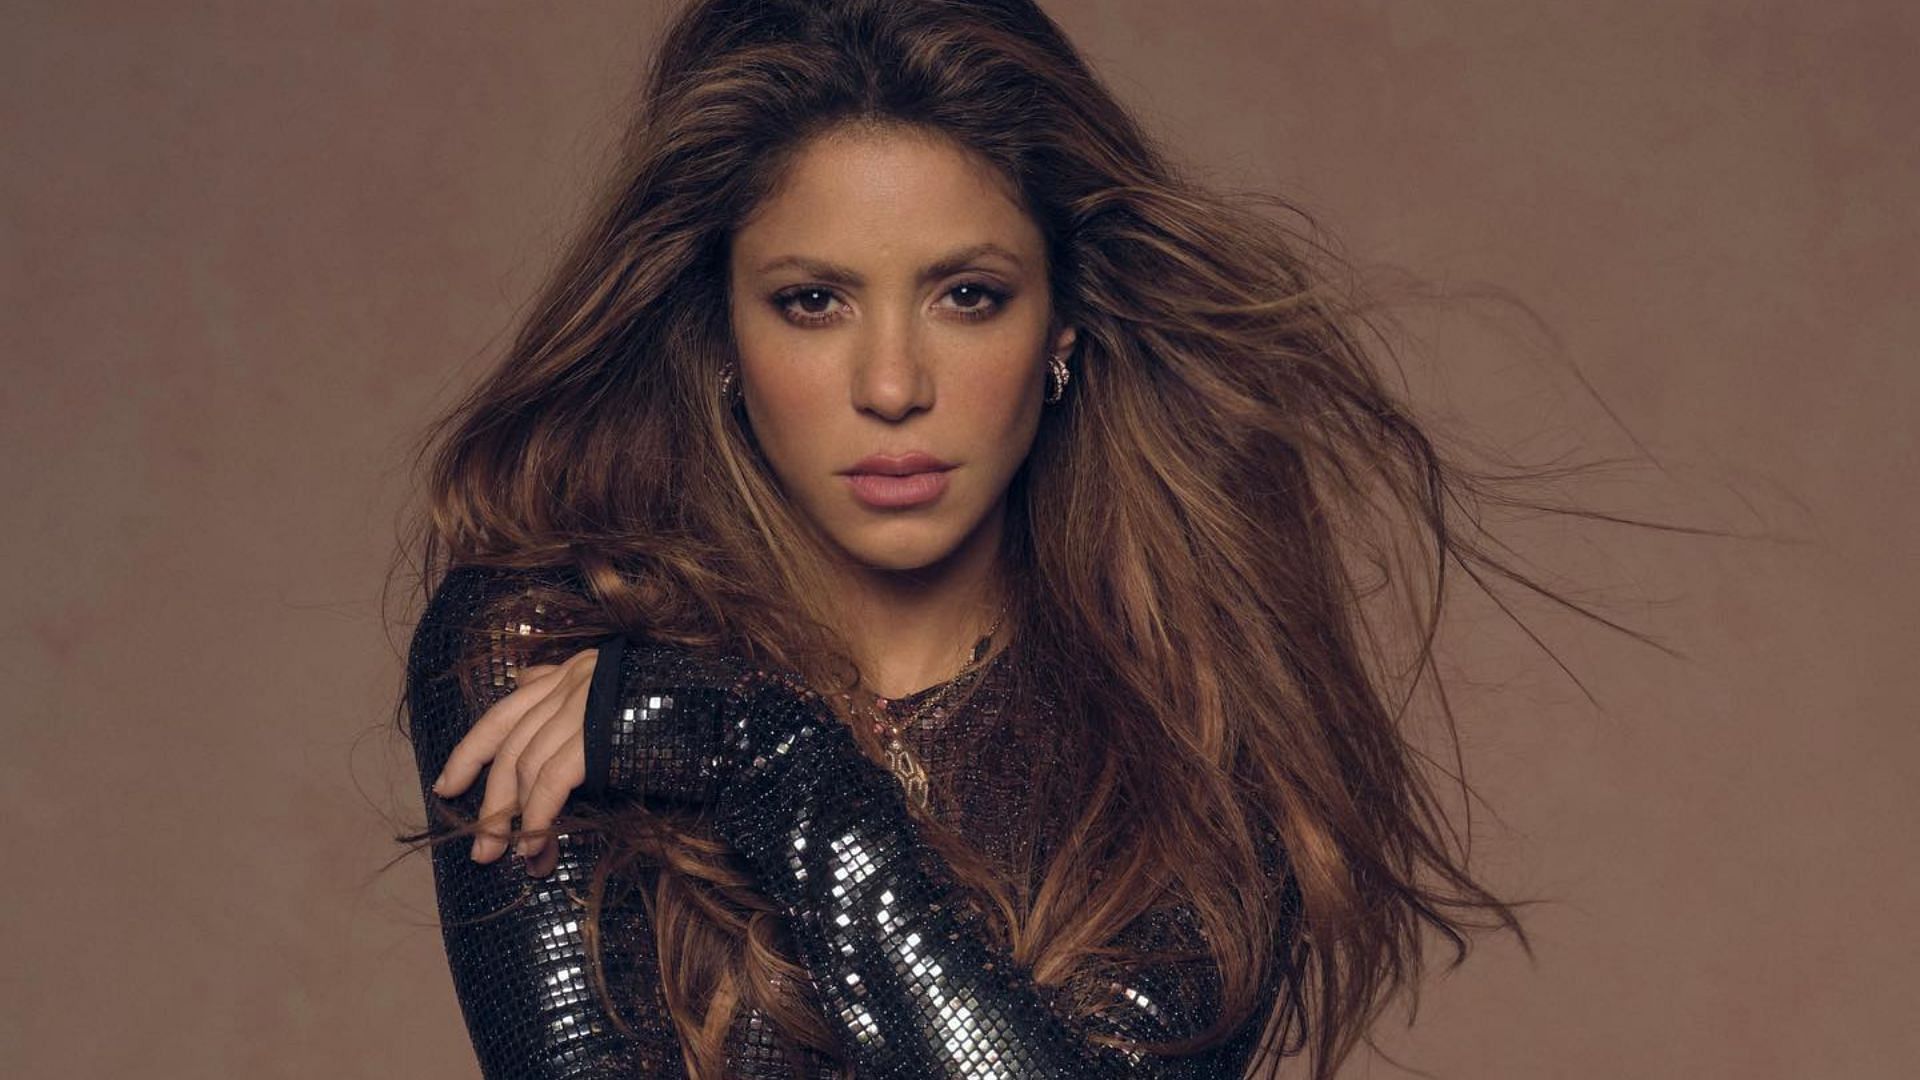 Shakira and Gerard Pique split in June 2022 after 12 years together (Image via shakira/Instagram).